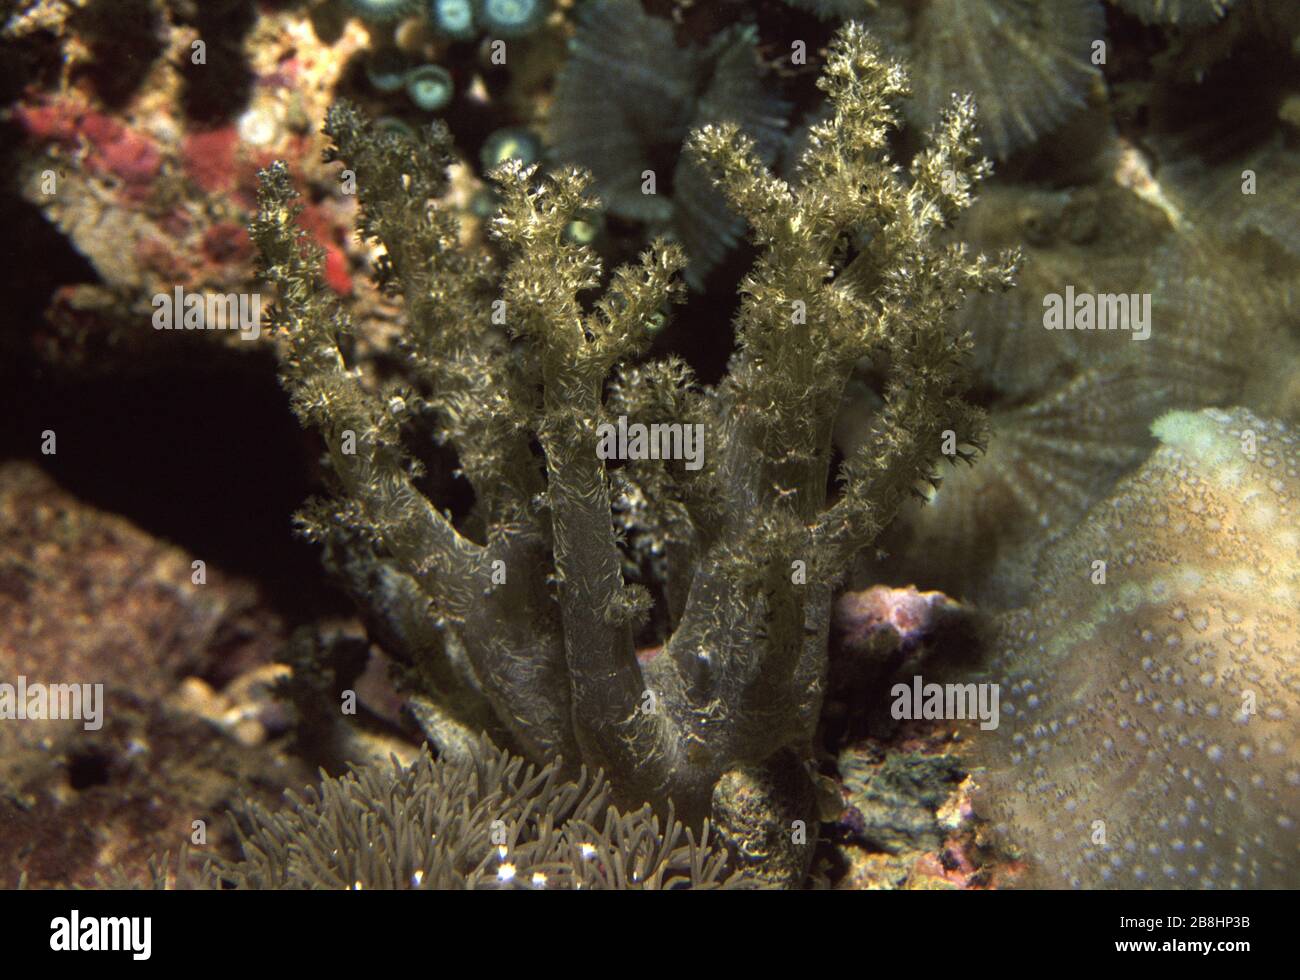 Cauliflower soft coral, Lemnalia sp. Stock Photo